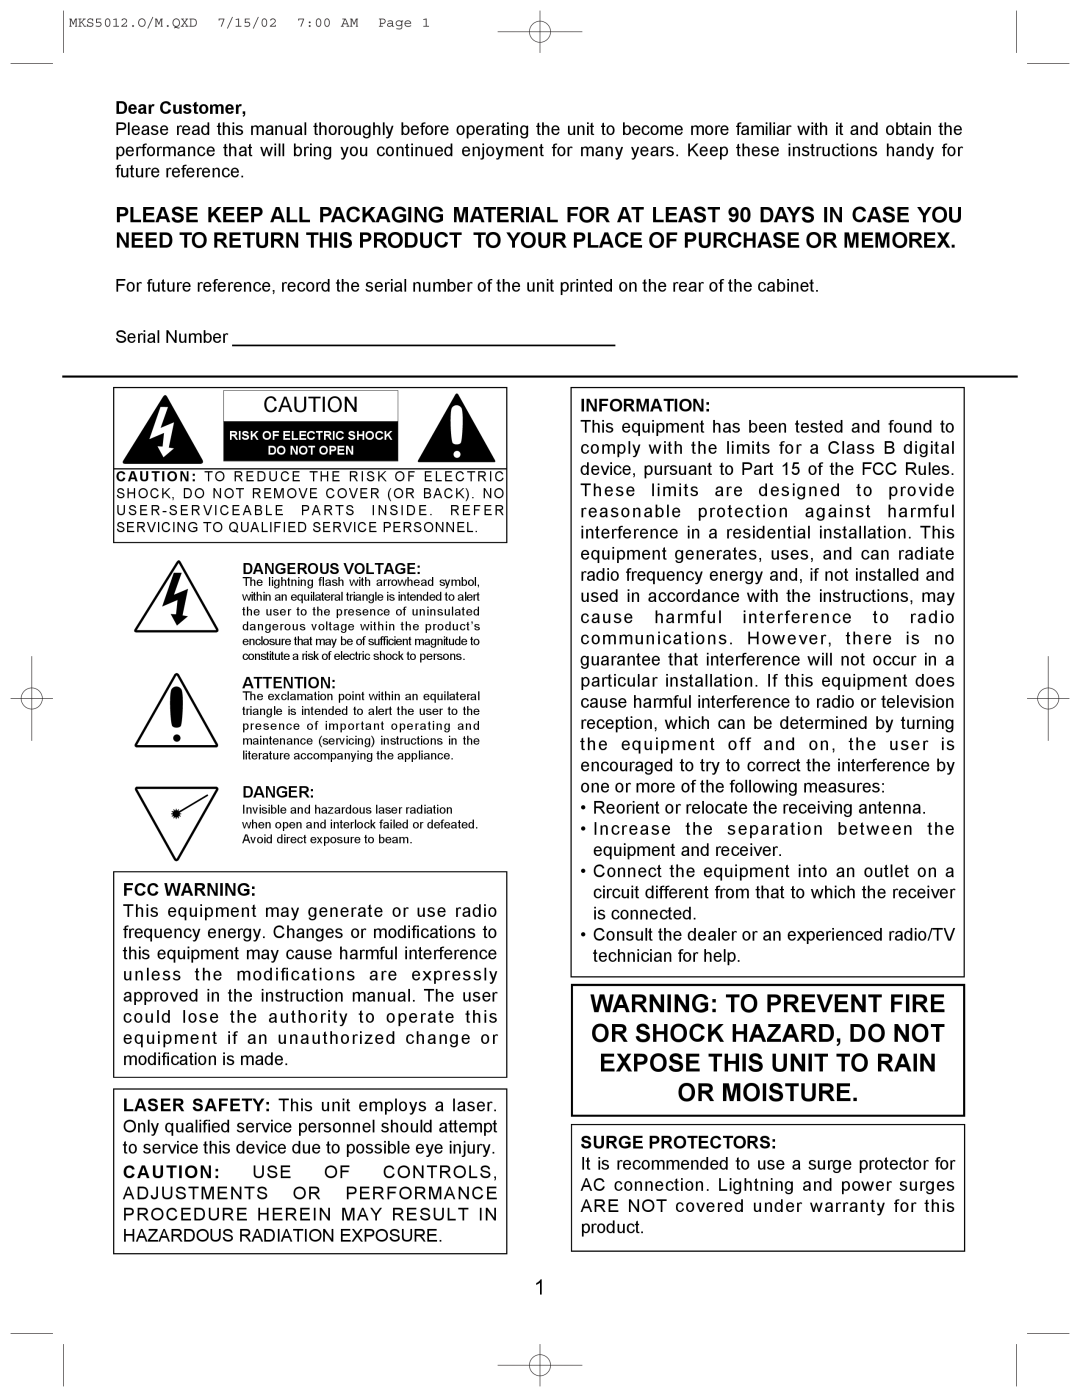 Memorex MKS5012 manual Dear Customer, Fcc Warning, Information, Surge Protectors 